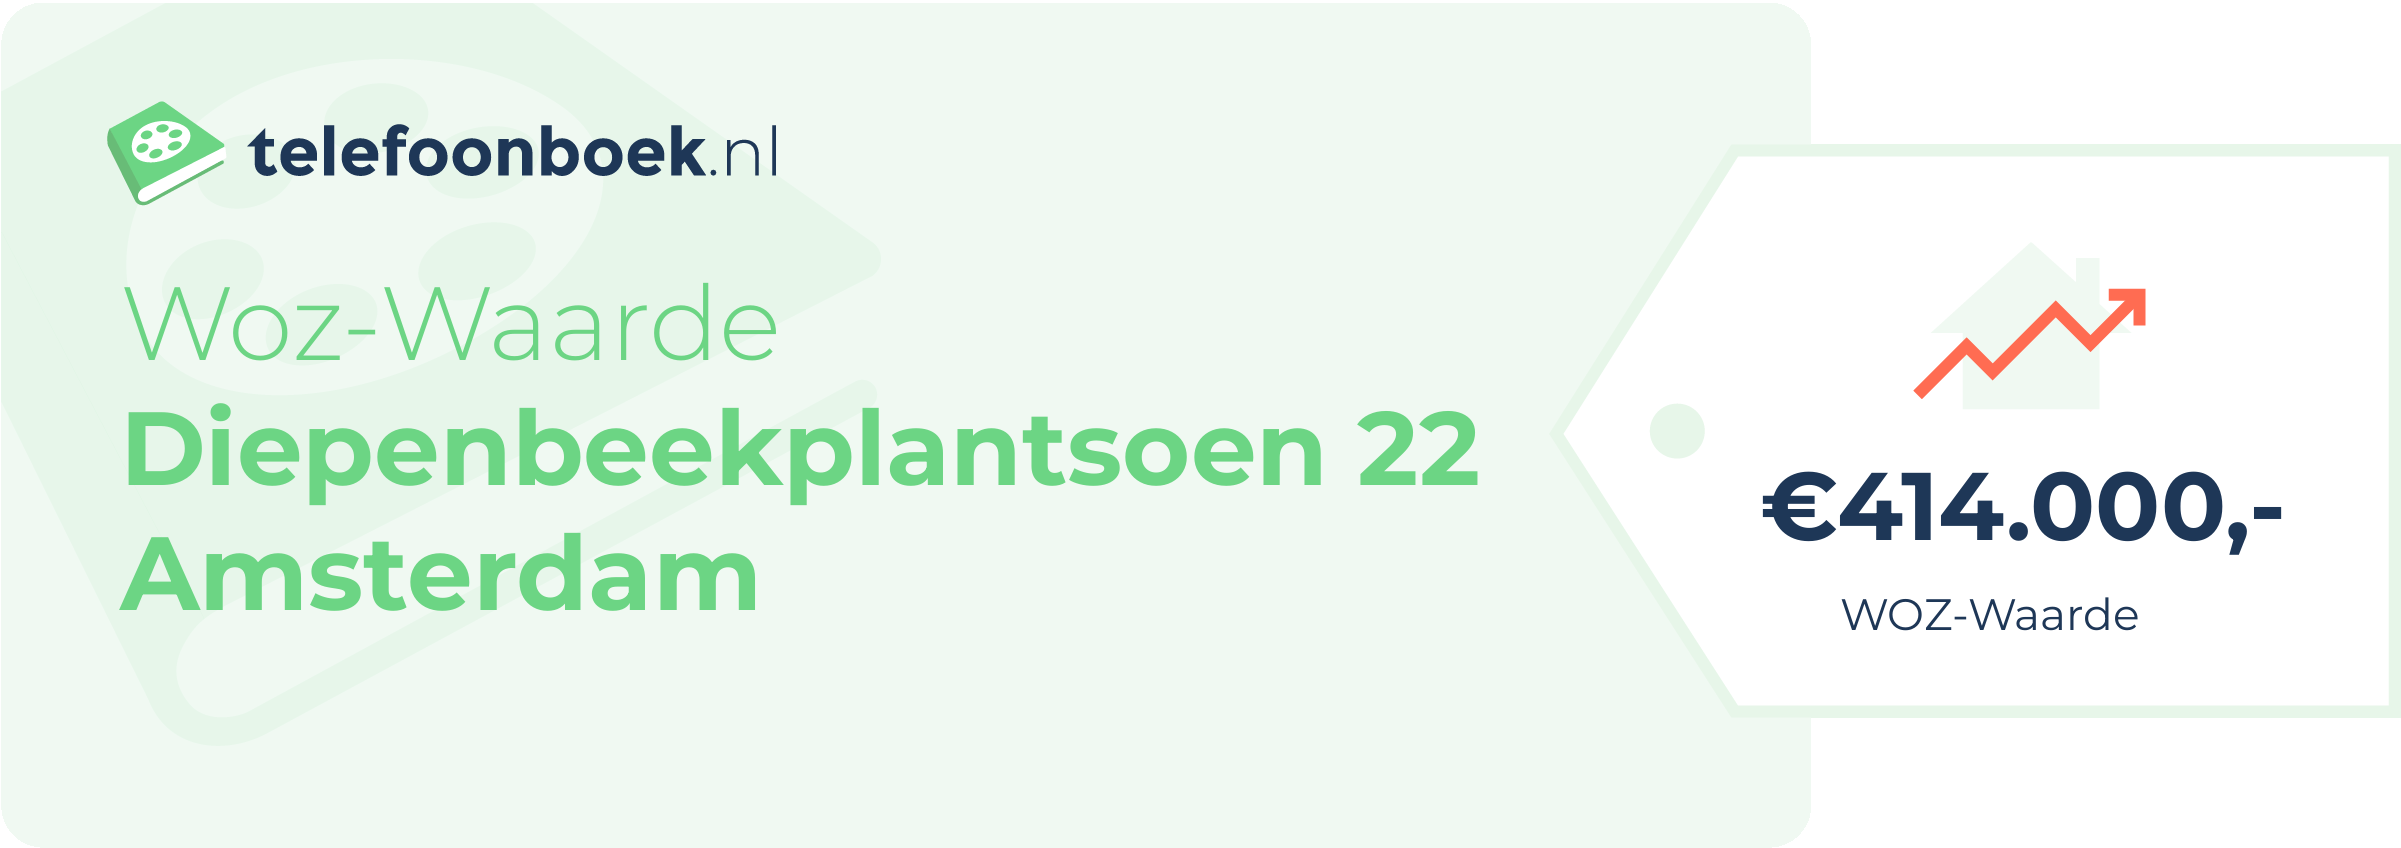 WOZ-waarde Diepenbeekplantsoen 22 Amsterdam